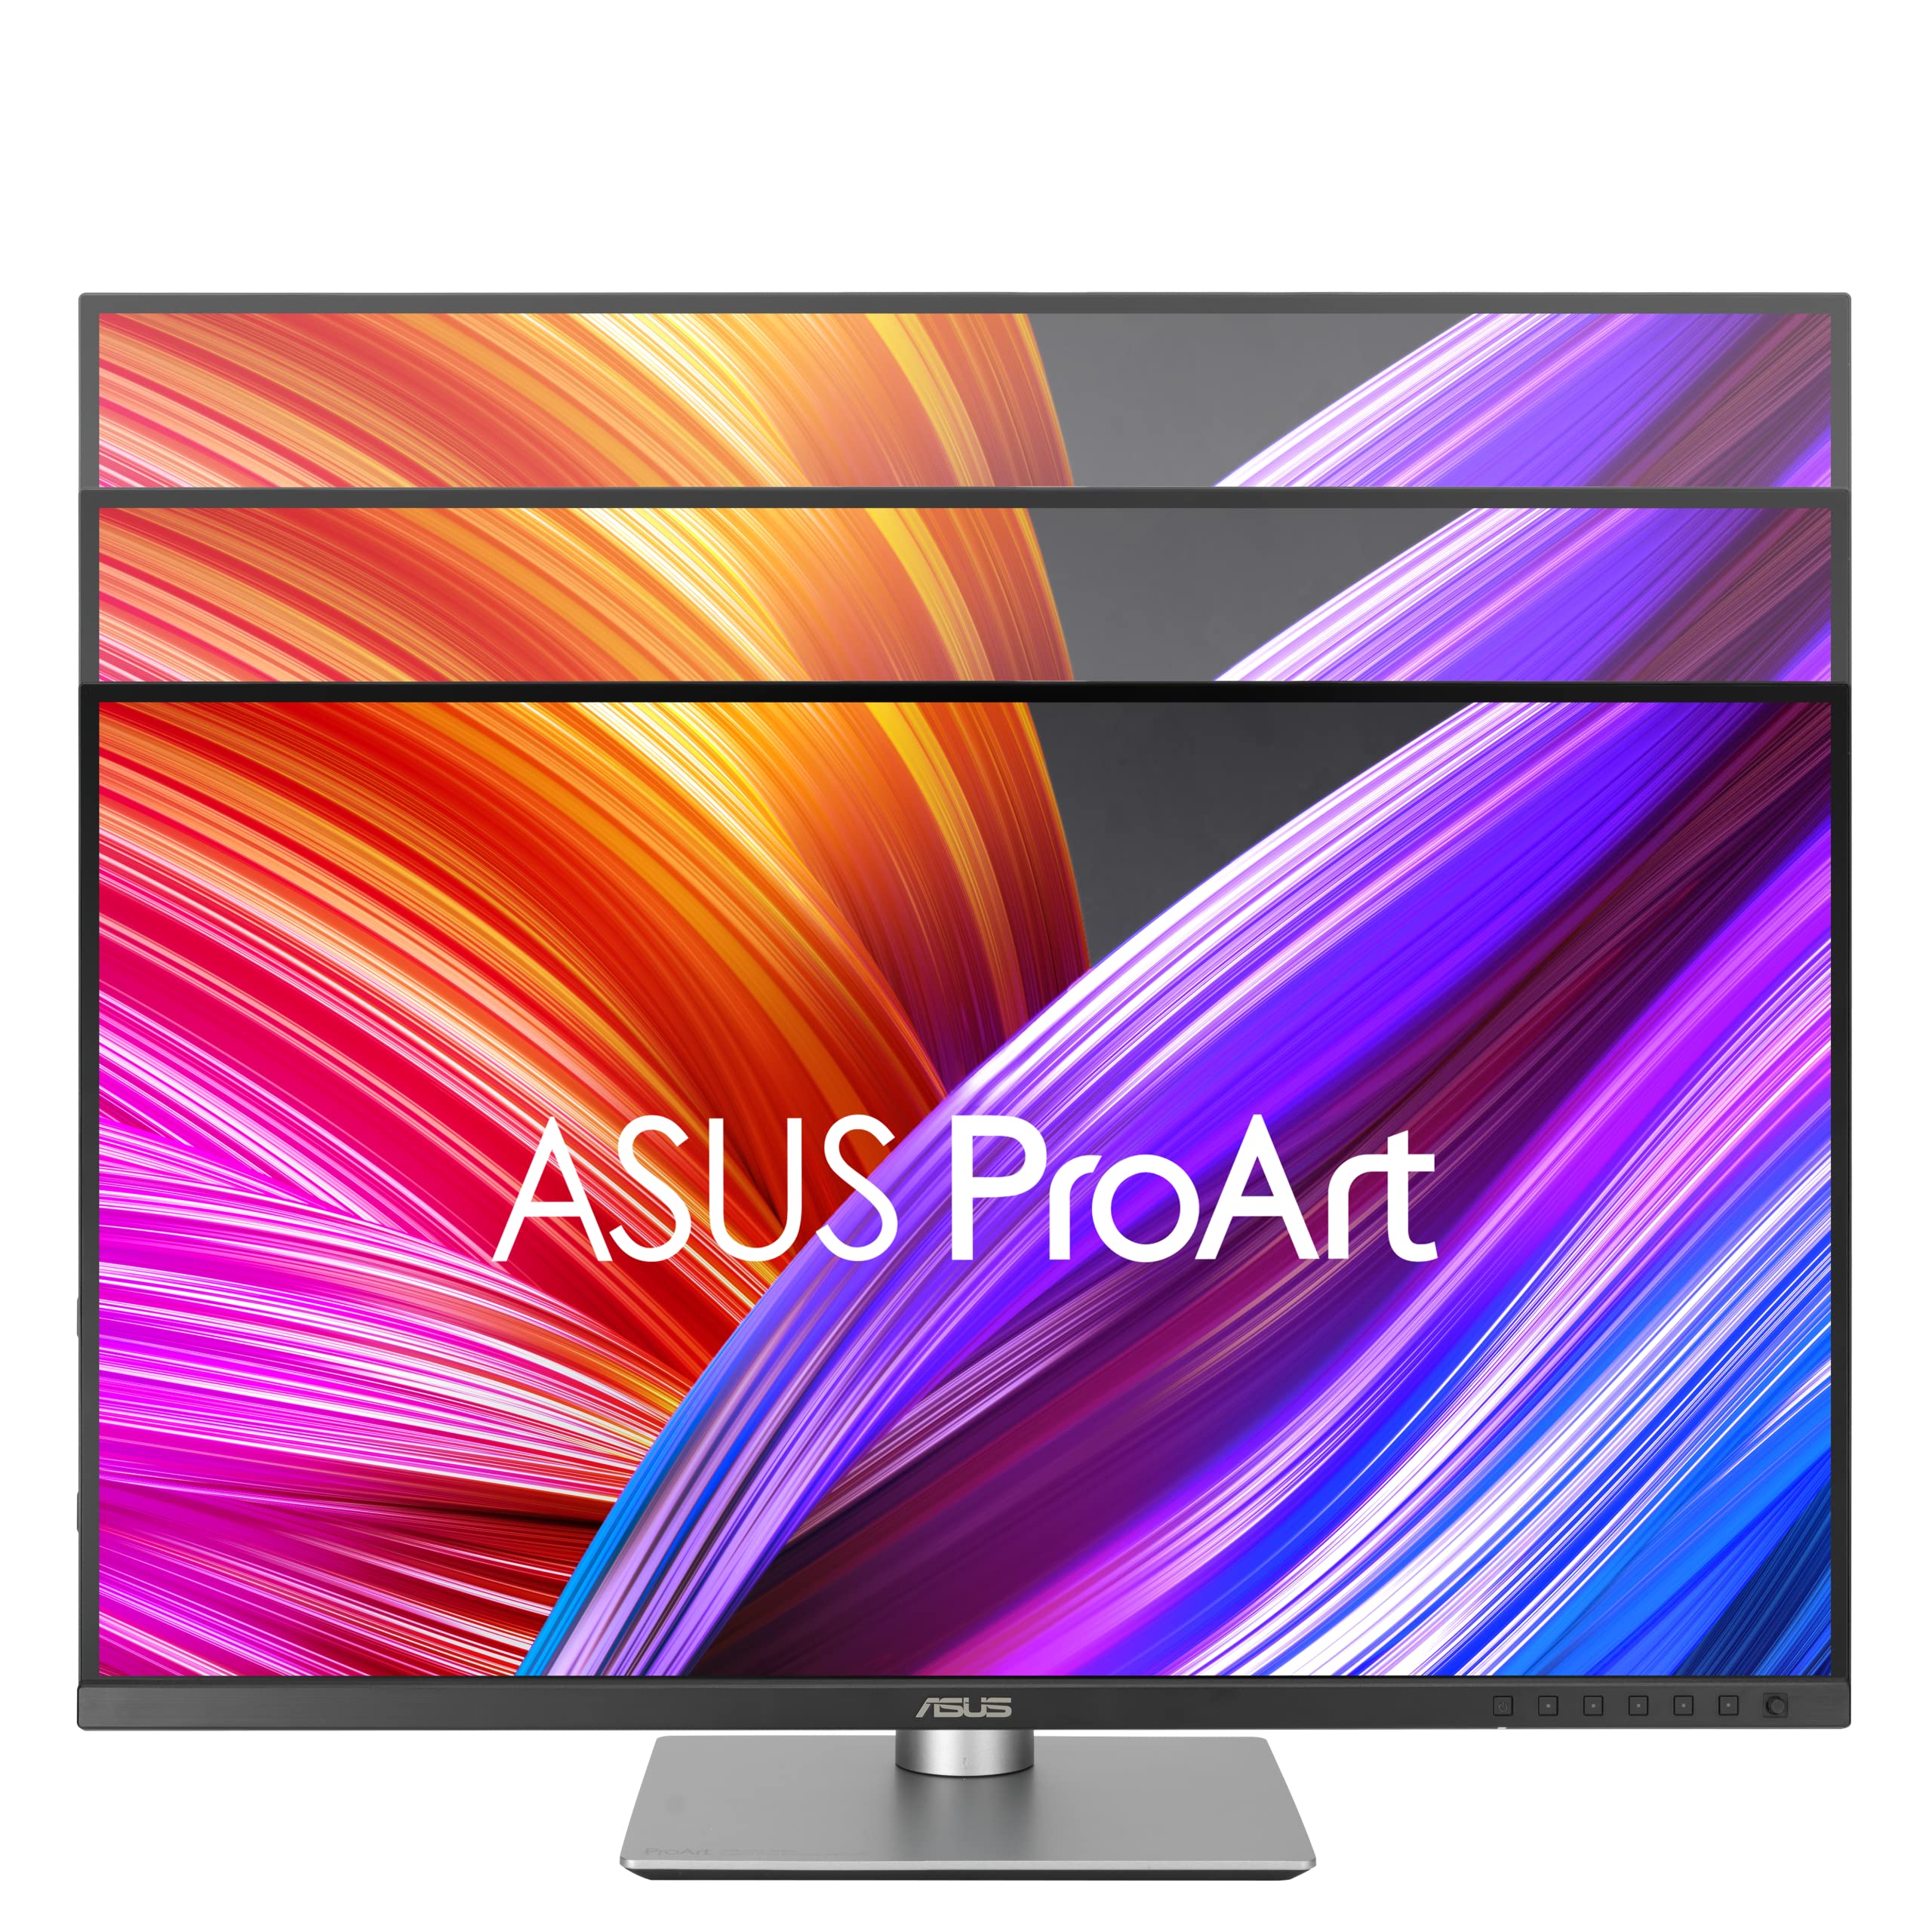 ASUS ProArt Display 27” 4K HDR Professional Monitor (PA279CRV) - IPS, UHD (3840 x 2160), 99% DCI-P3/Adobe RGB, ΔE  2, Calman Verified, USB-C PD 96W, DisplayPort, Daisy-Chain, Height Adjustable